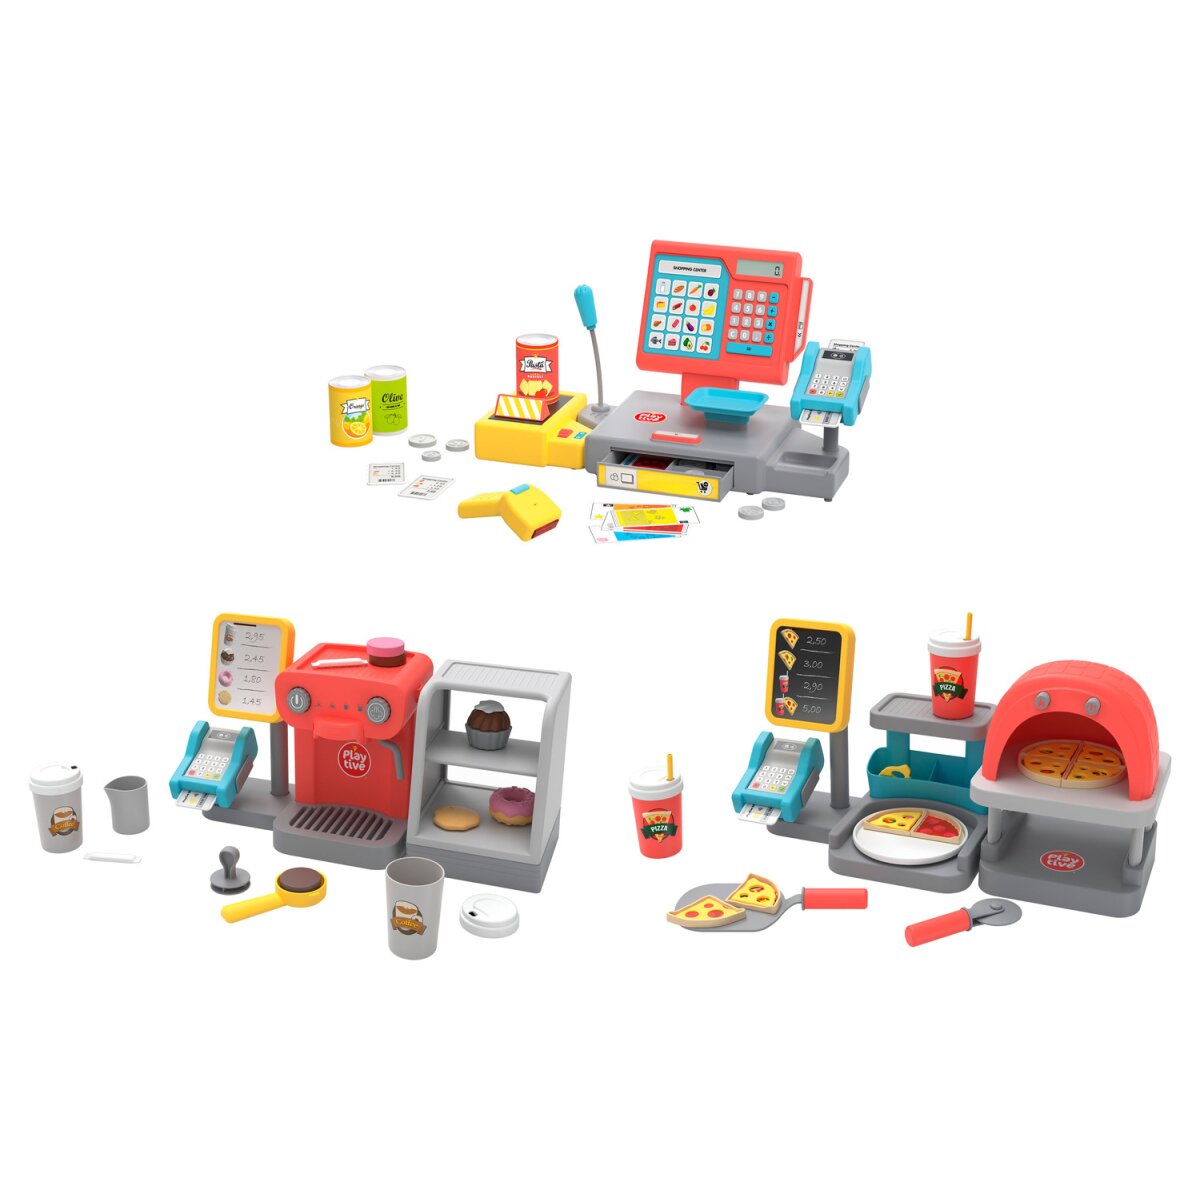 Playtive Spielzeugkasse / Cafe-Shop / Pizza-Shop - B-Ware, 12,99 €